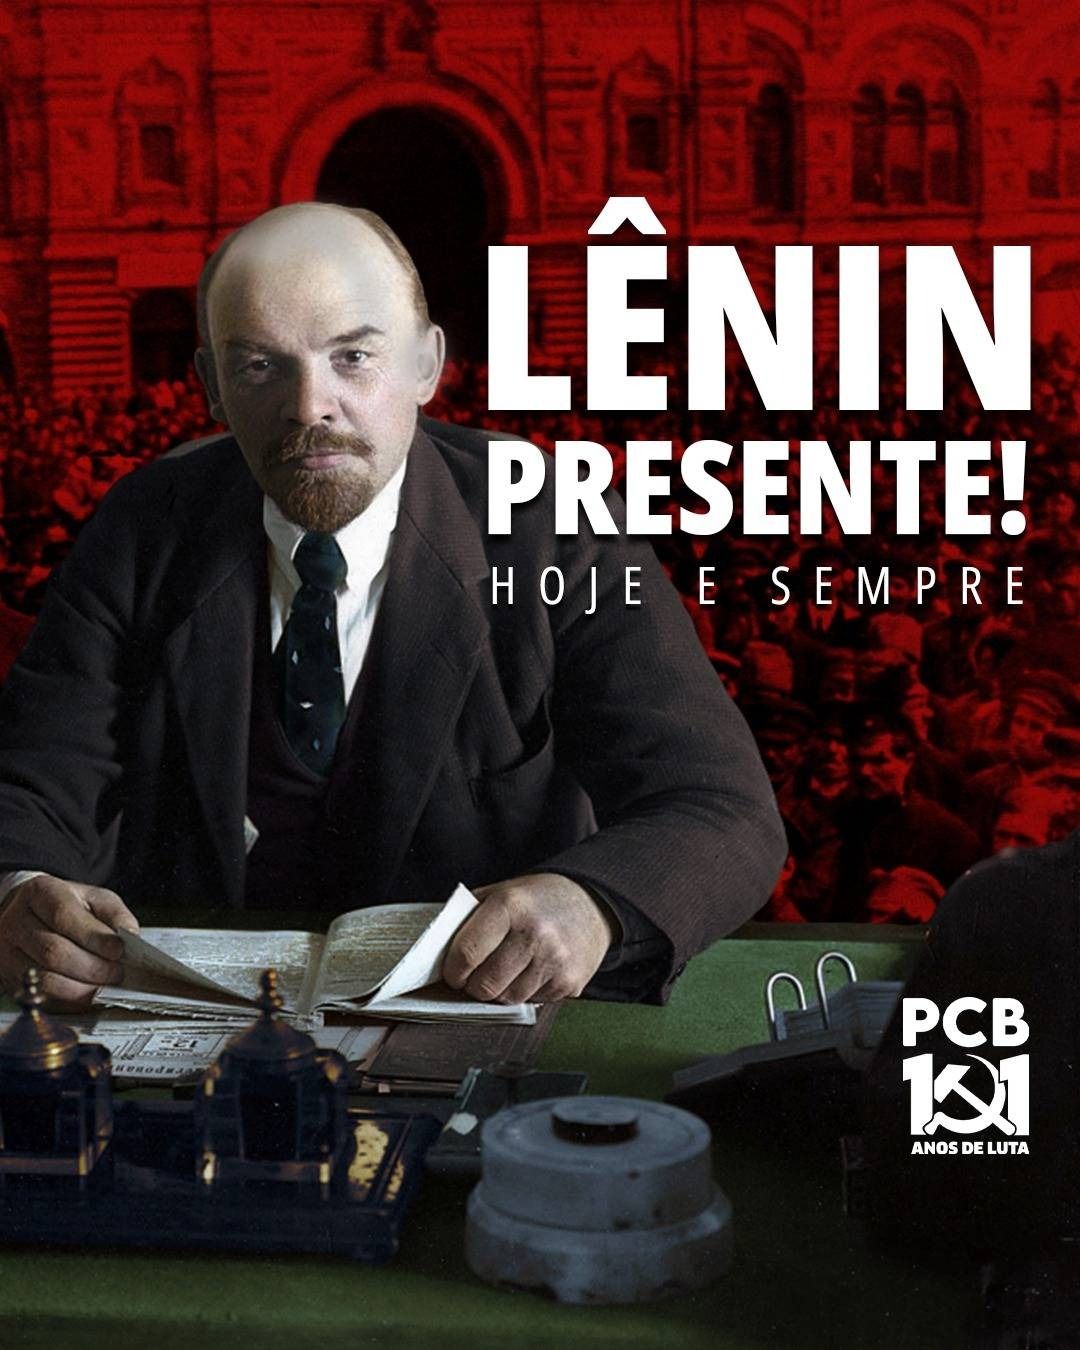 100 anos depois: a atualidade do pensamento de Lenin